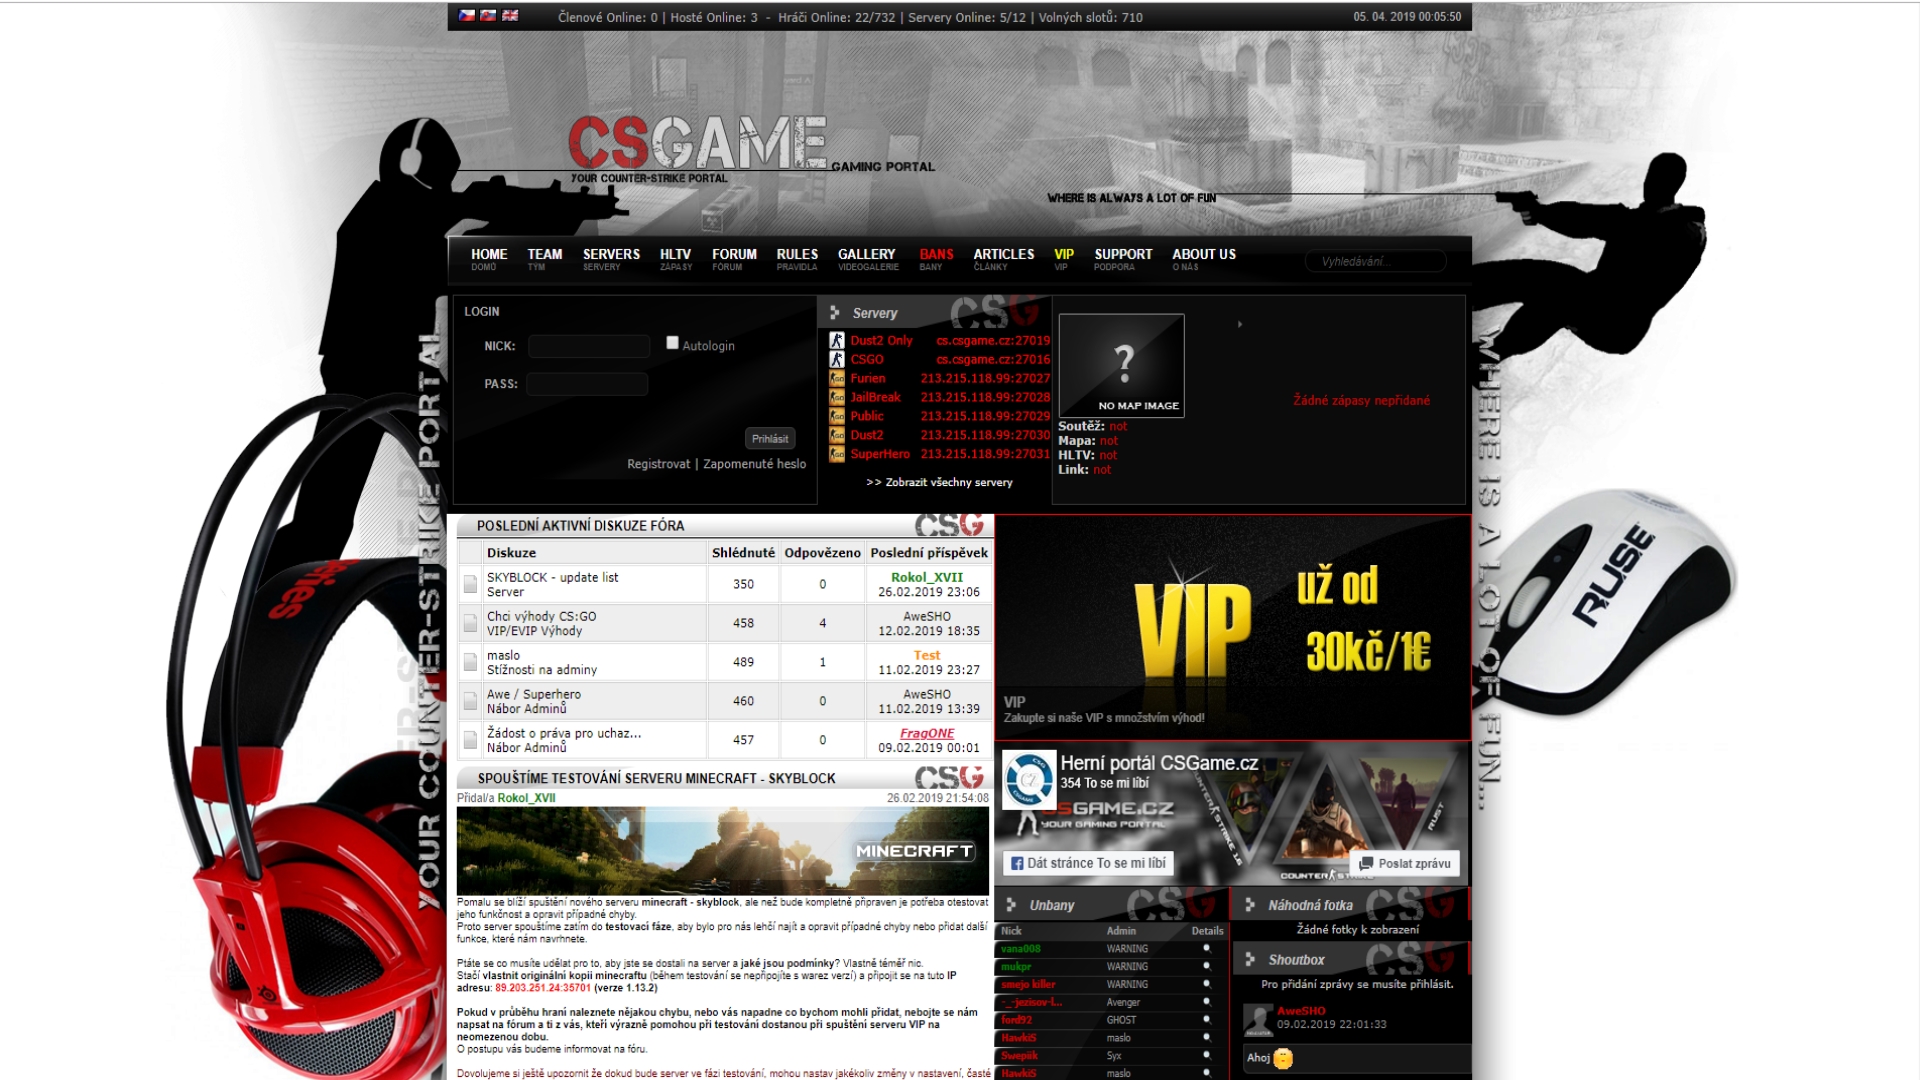 CSGame.cz - Gaming portál